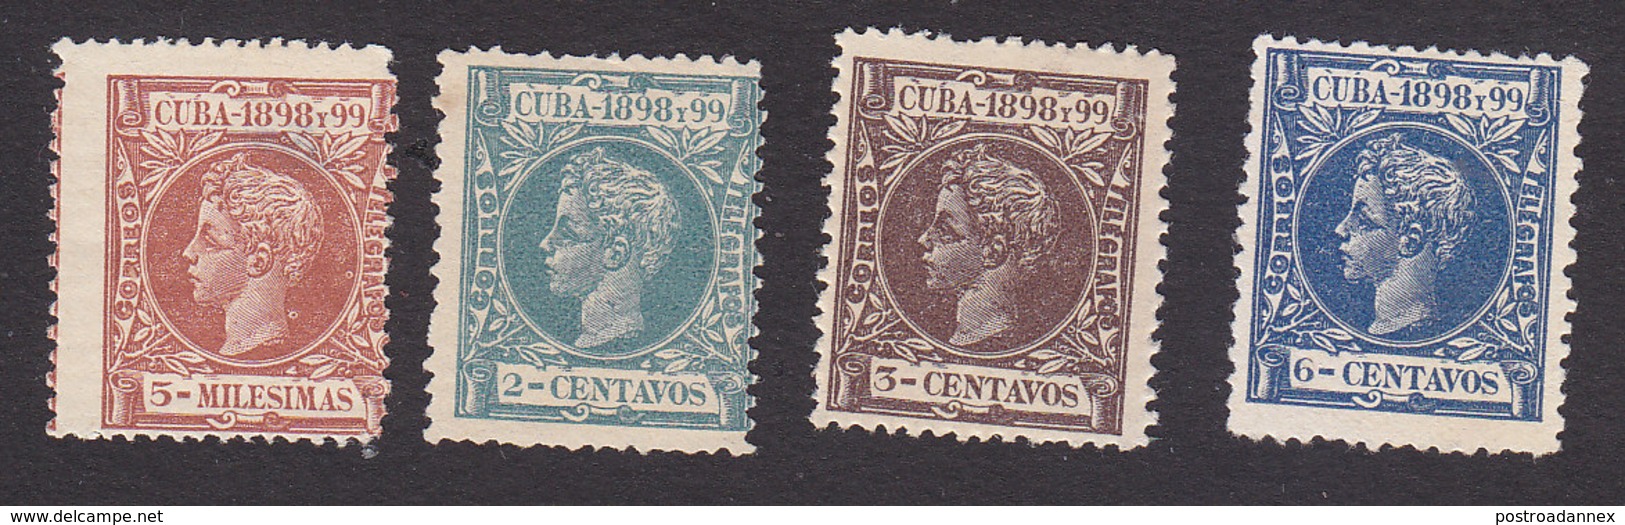 Cuba, Scott #160, 162-163, 166, Mint Hinged, King Alfonso XIII, Issued 1898 - Cuba (1874-1898)